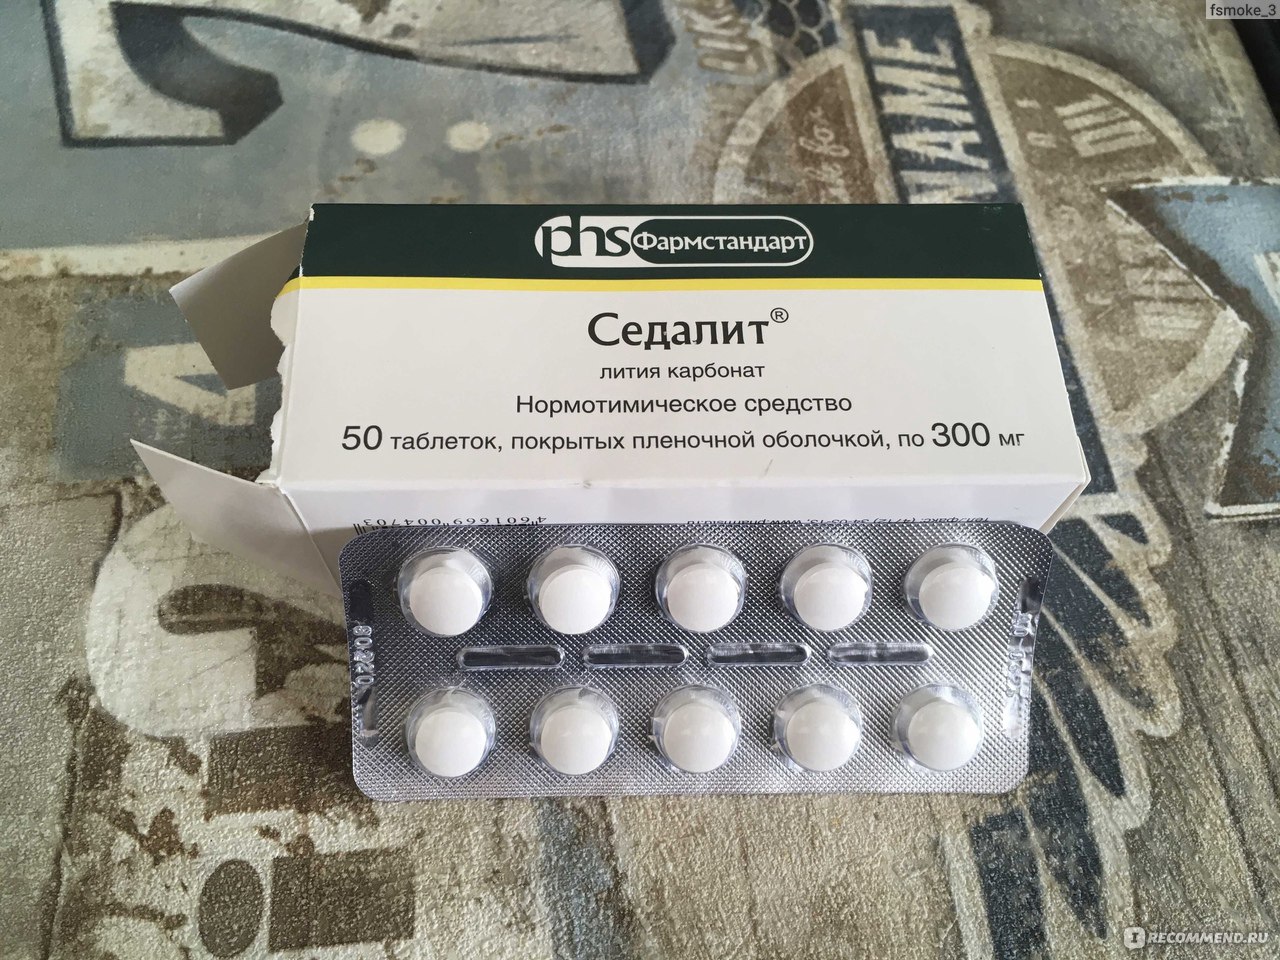 Лекарственный препарат Фармстандарт Седалит Лития карбонат .